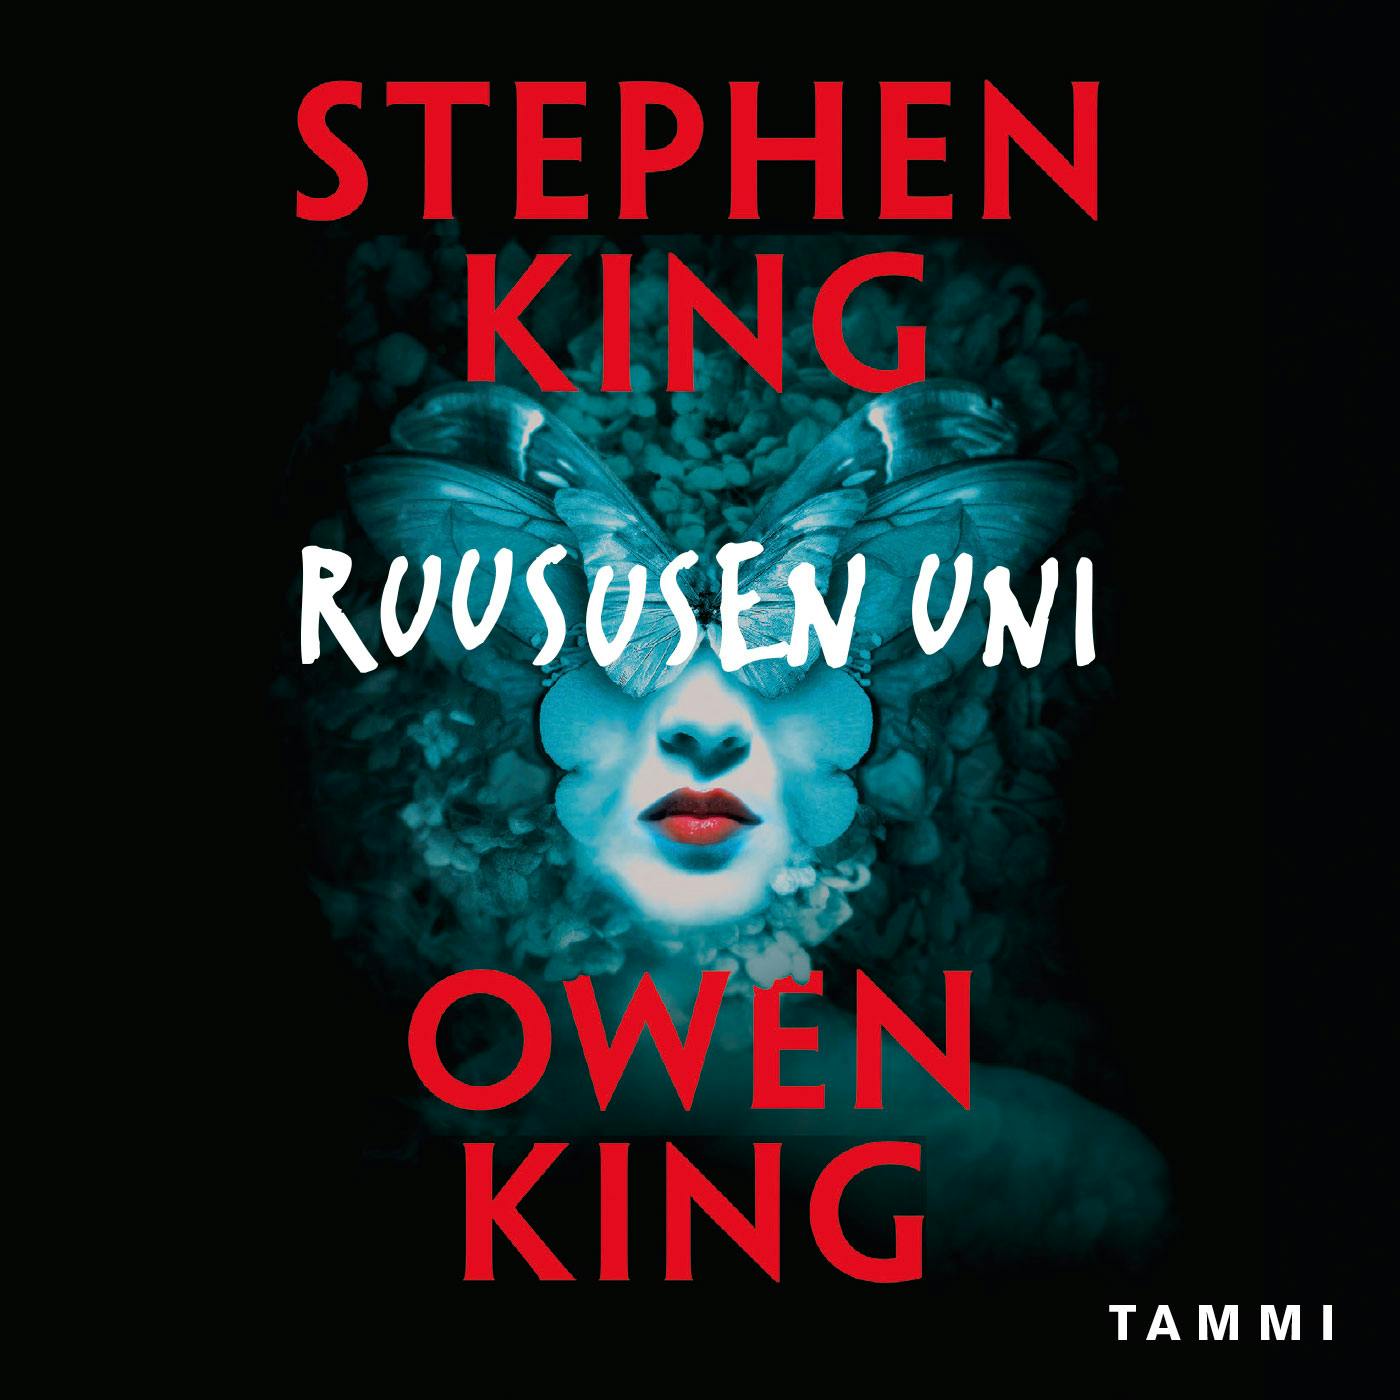 Ruususen uni - Stephen King, Owen King